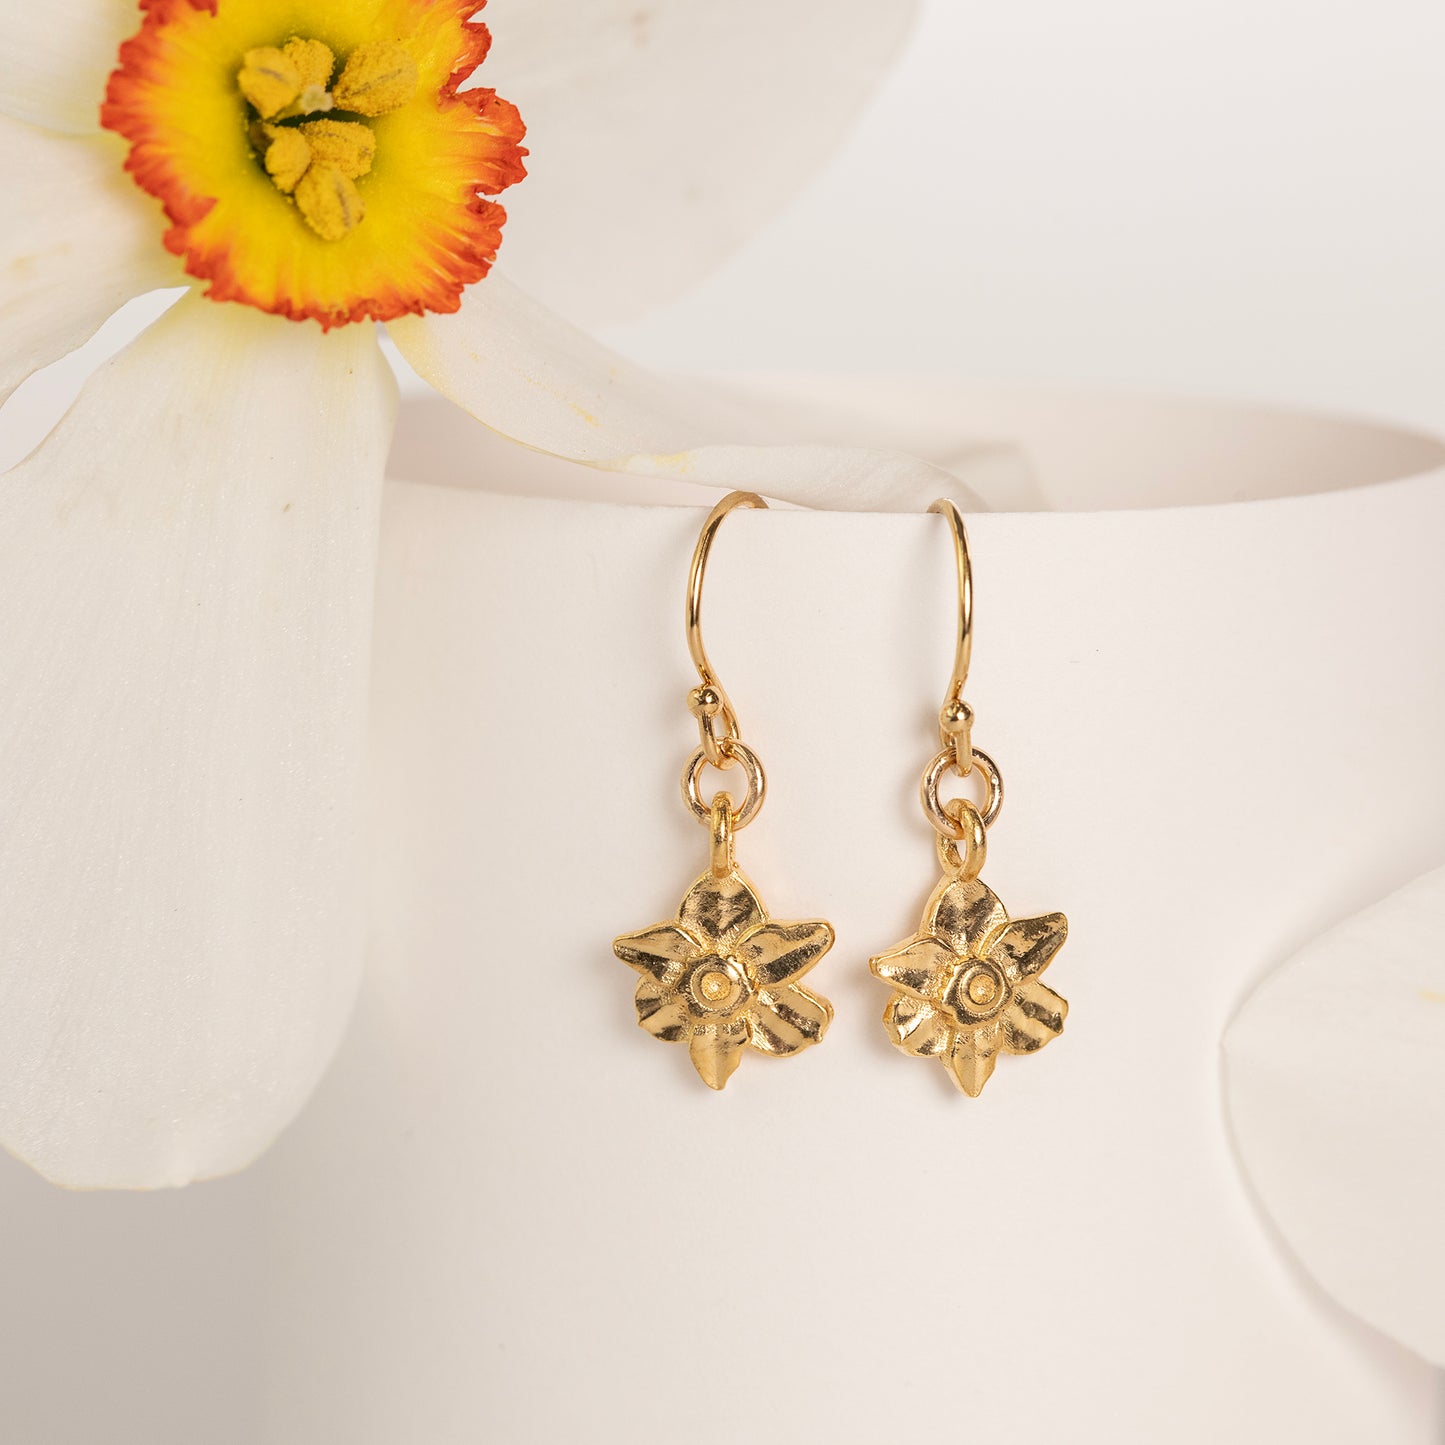 gold vermeil daffodil earrings